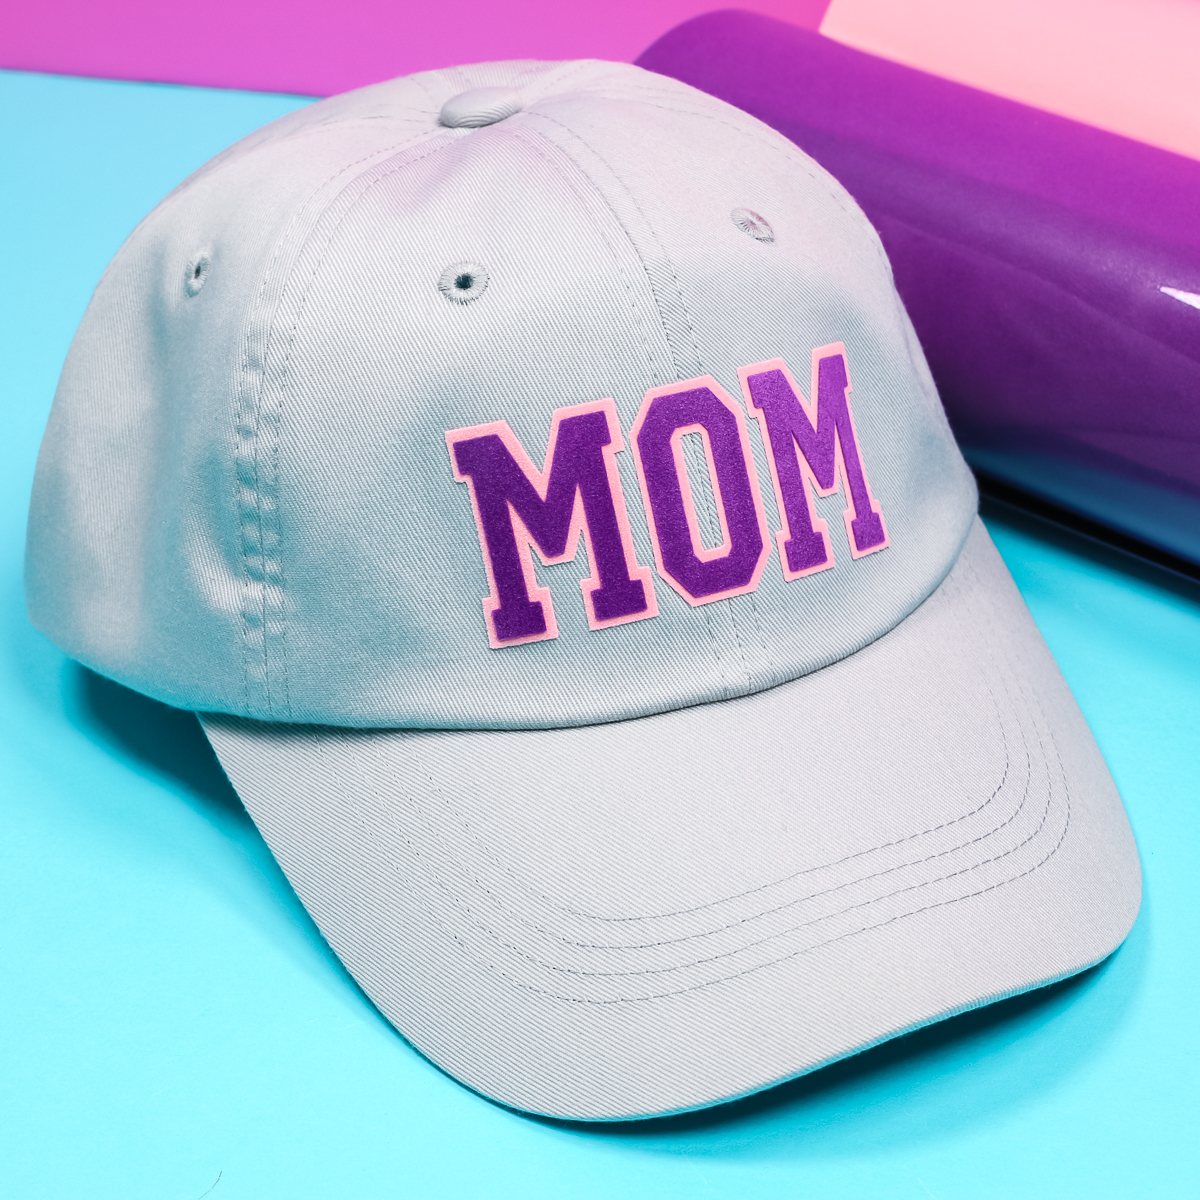 Mom varsity letter hat with StripFlock Pro.